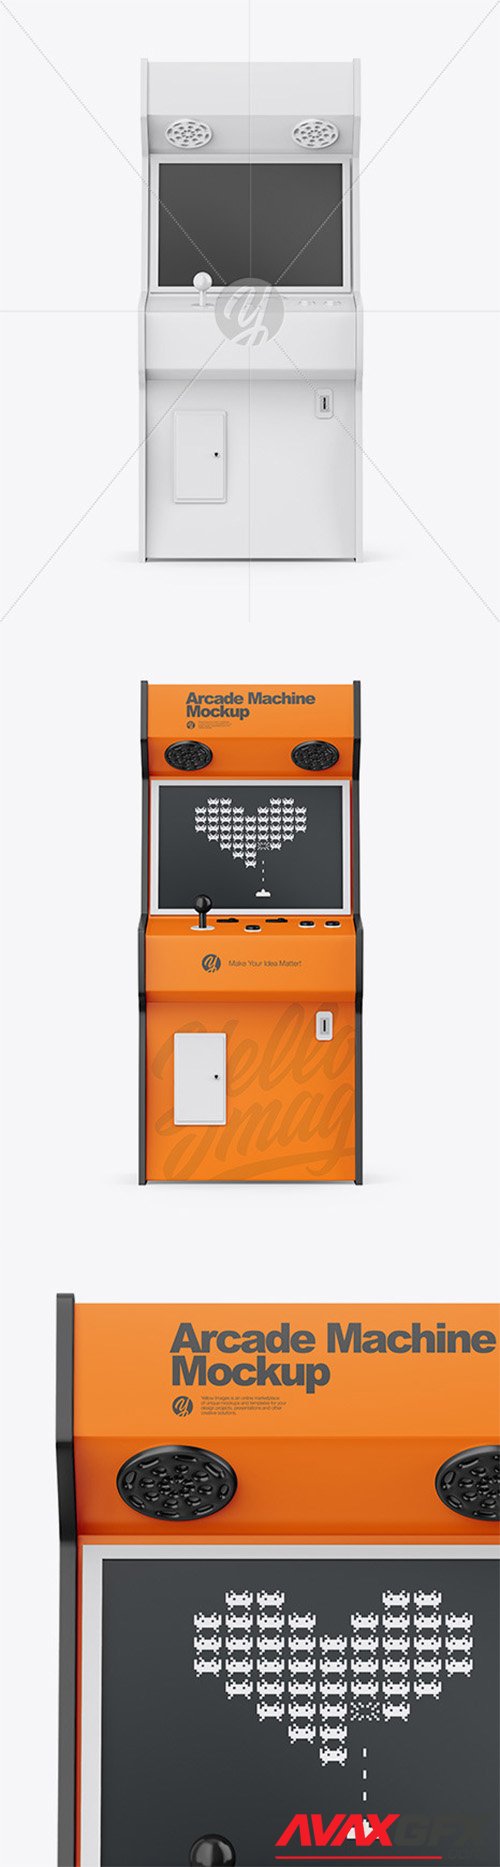 Arcade Machine Mockup 66553